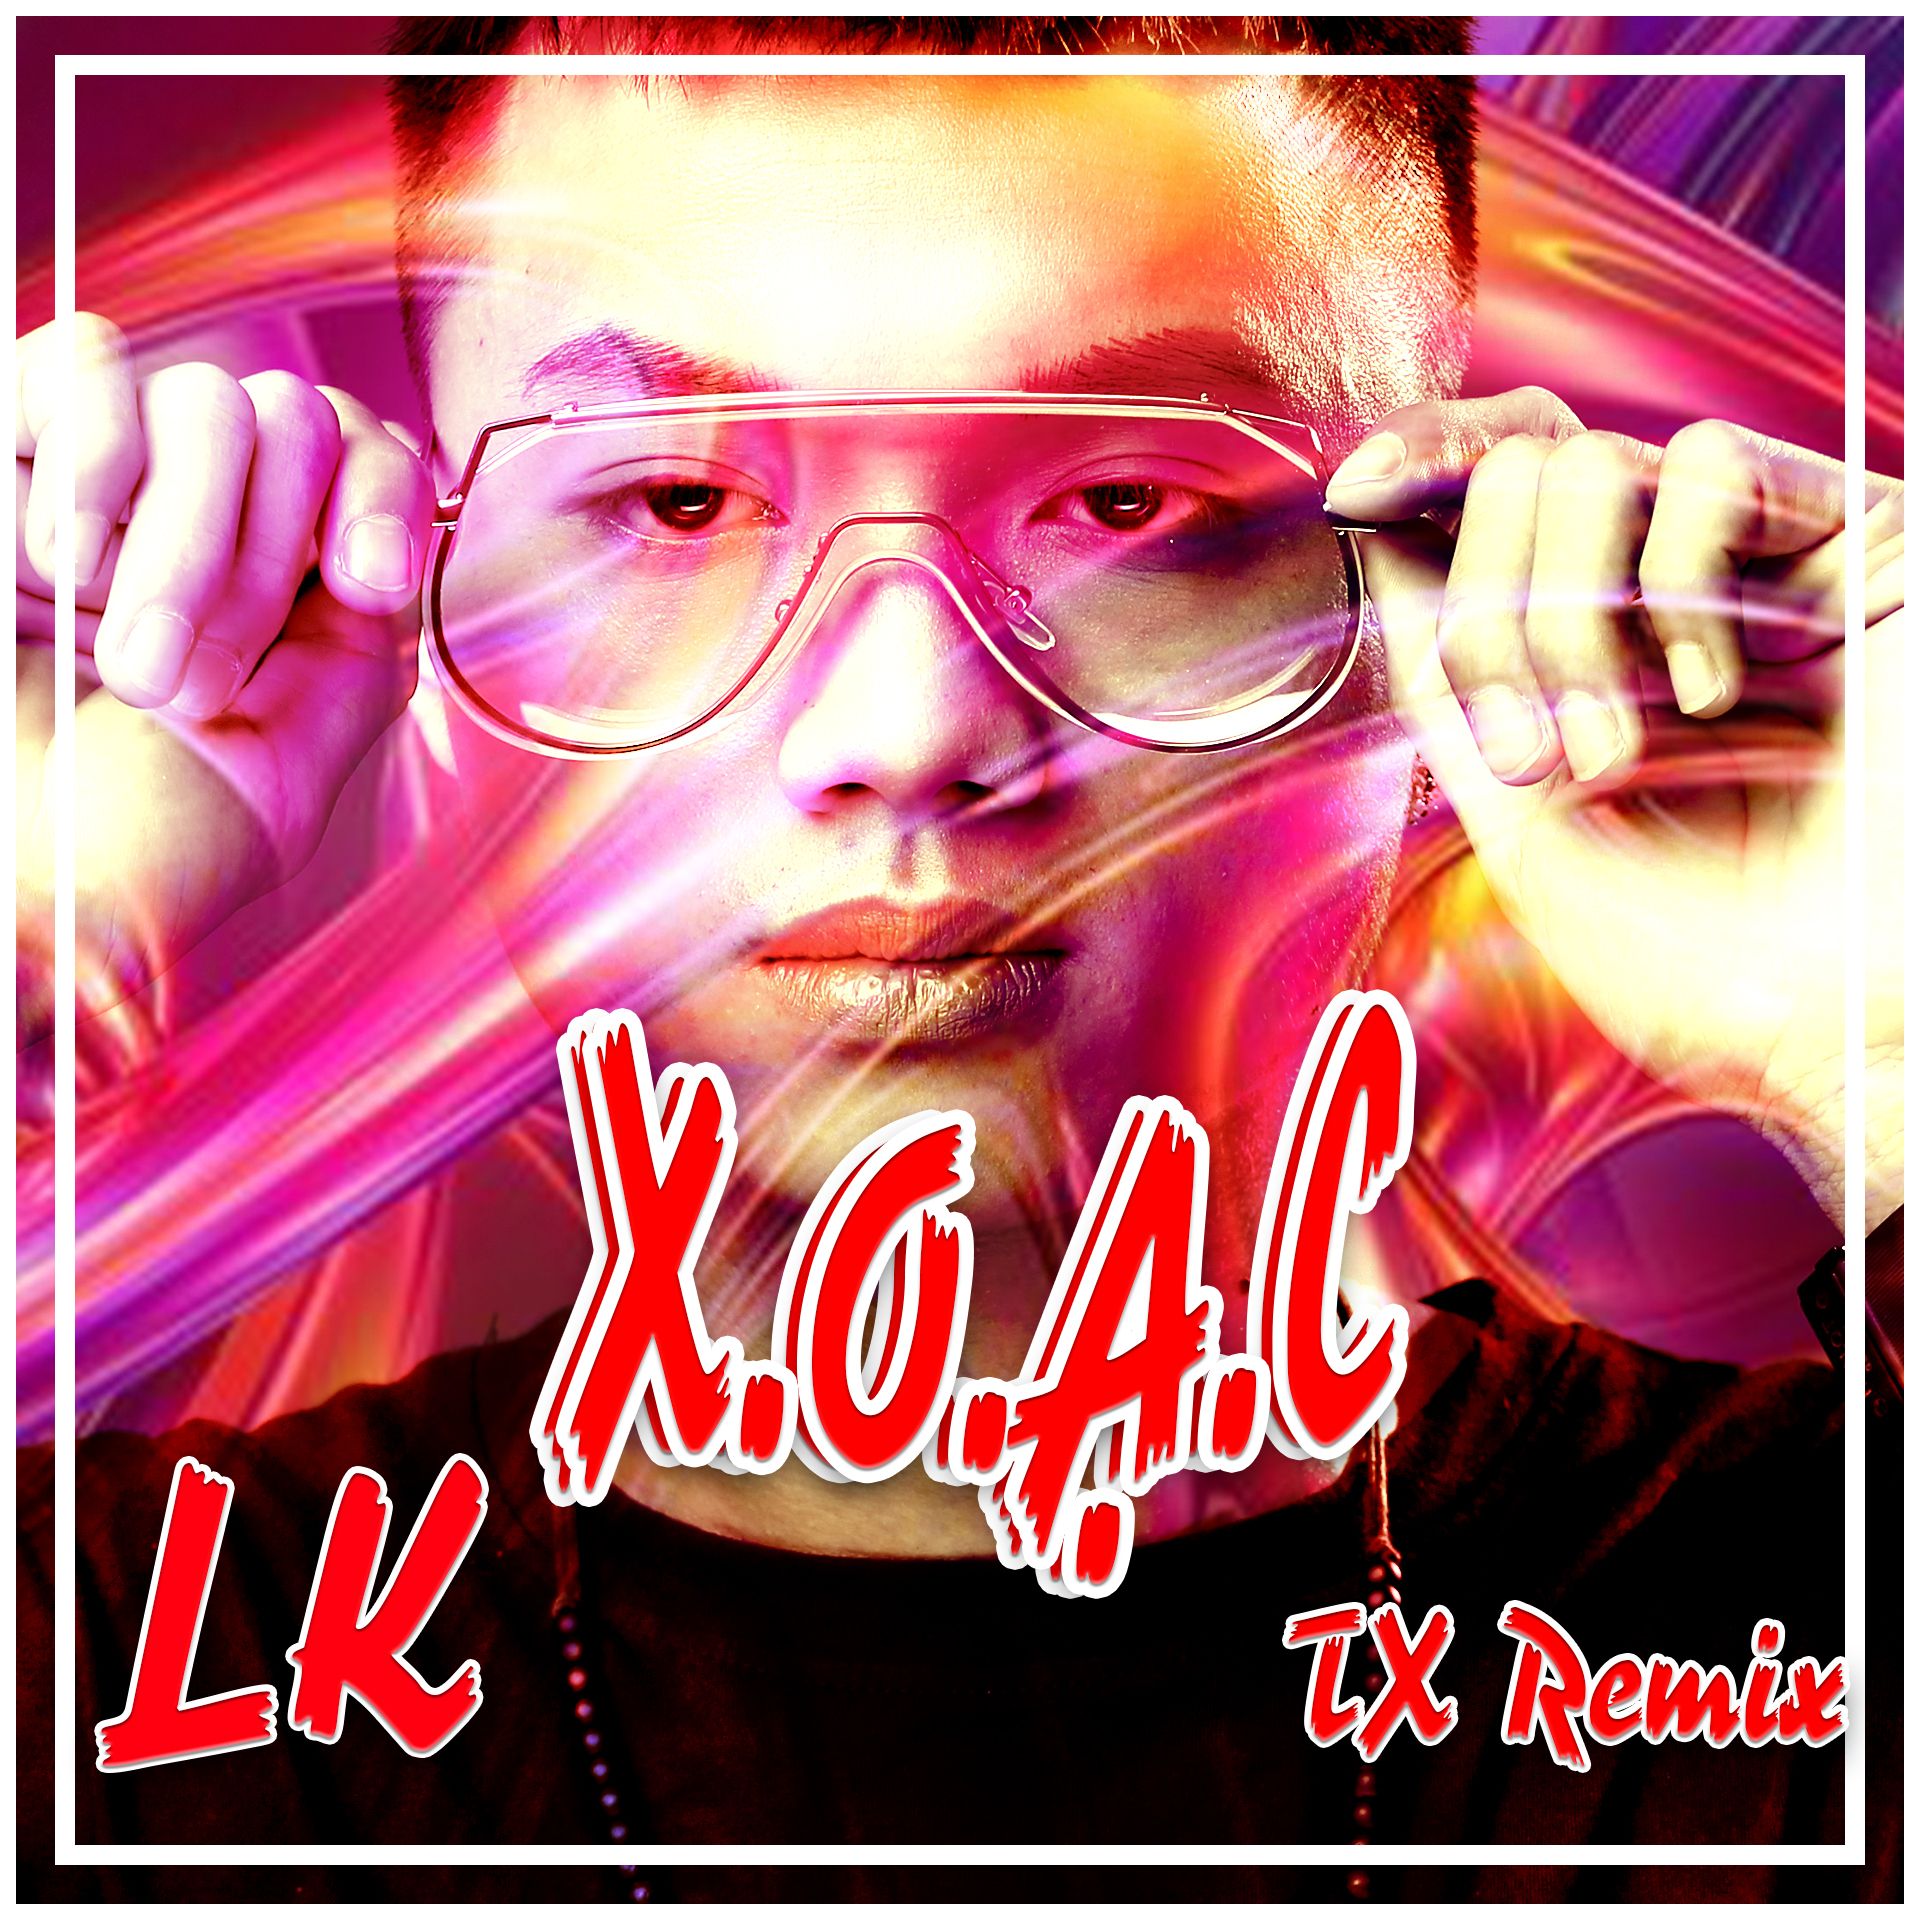 Download LK - X.O.Ạ.C - DJ TX REMIX